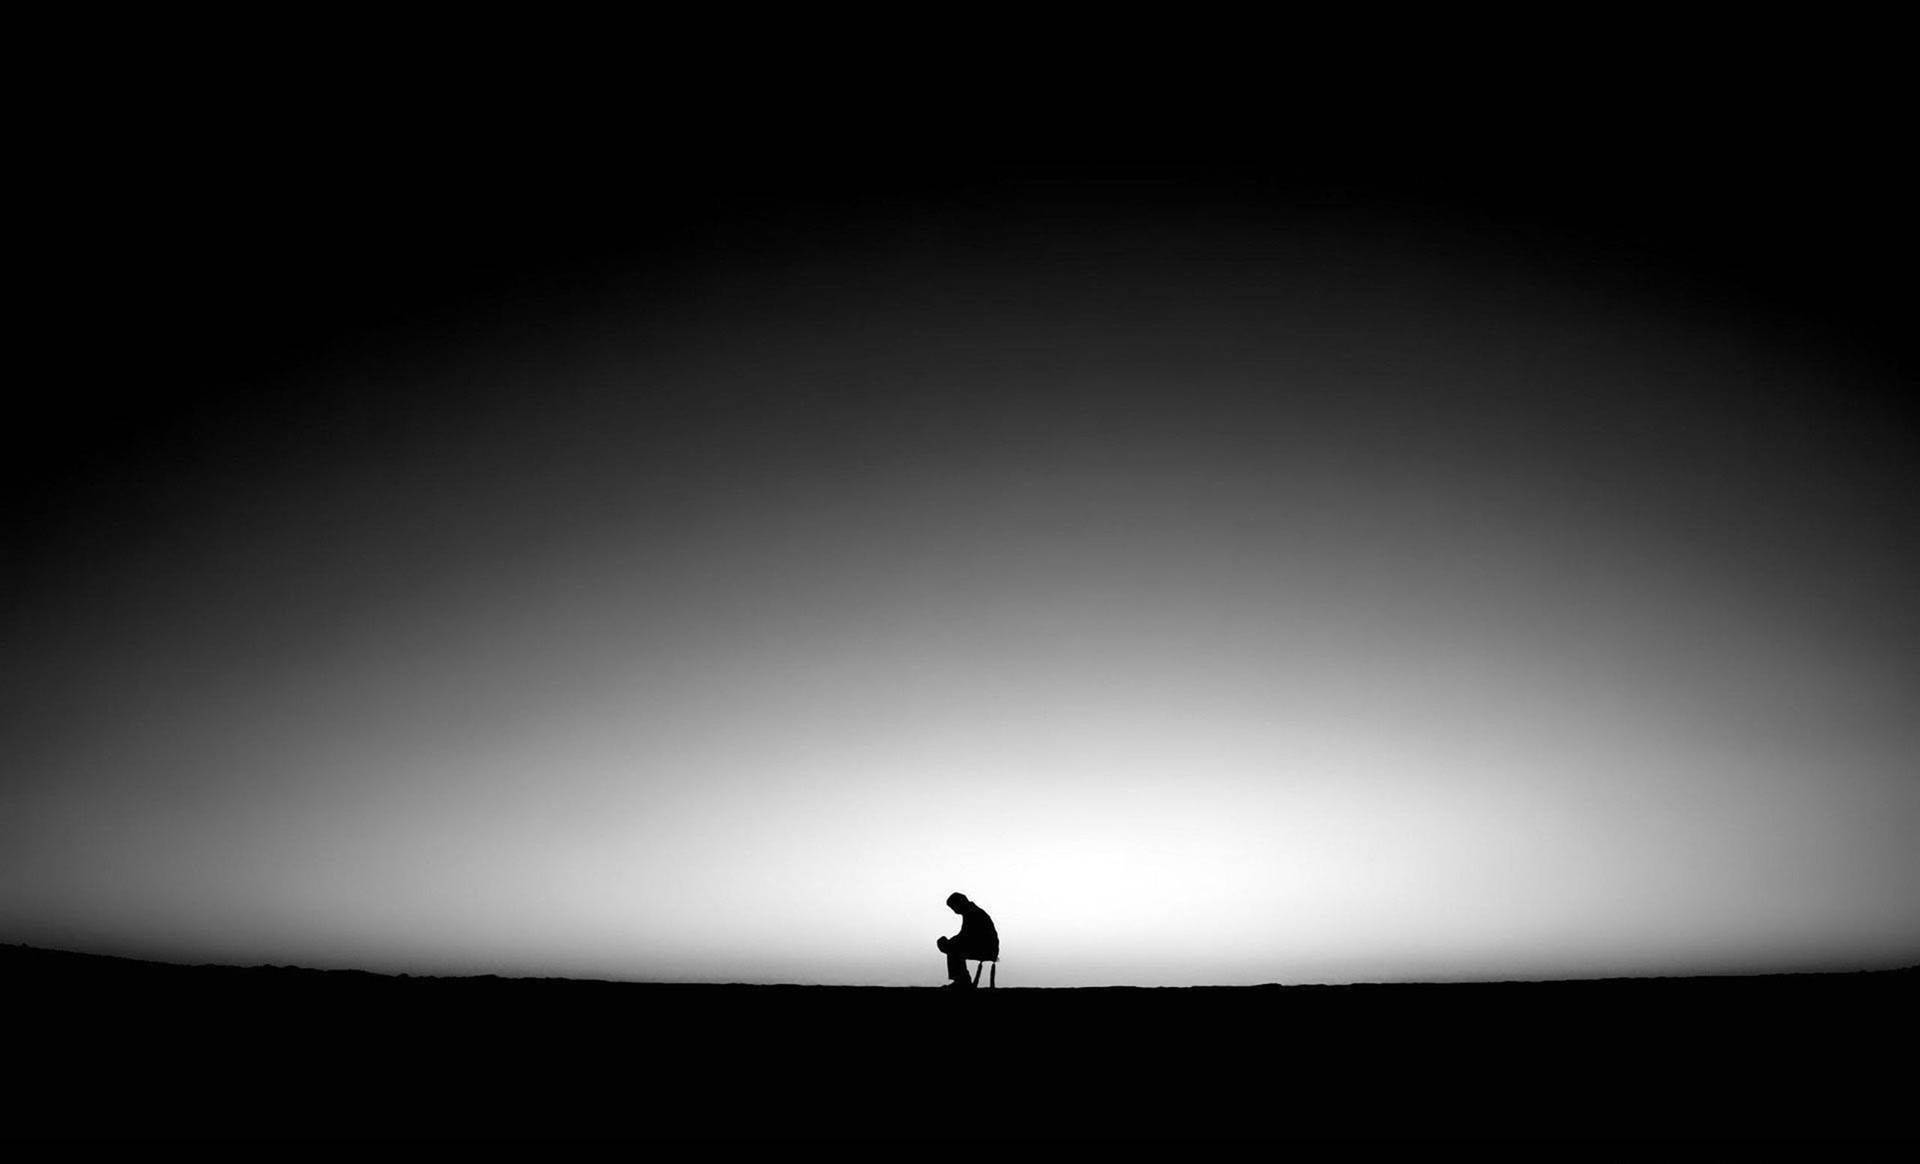 Sad Aesthetic Alone In Dark Silhouette Background